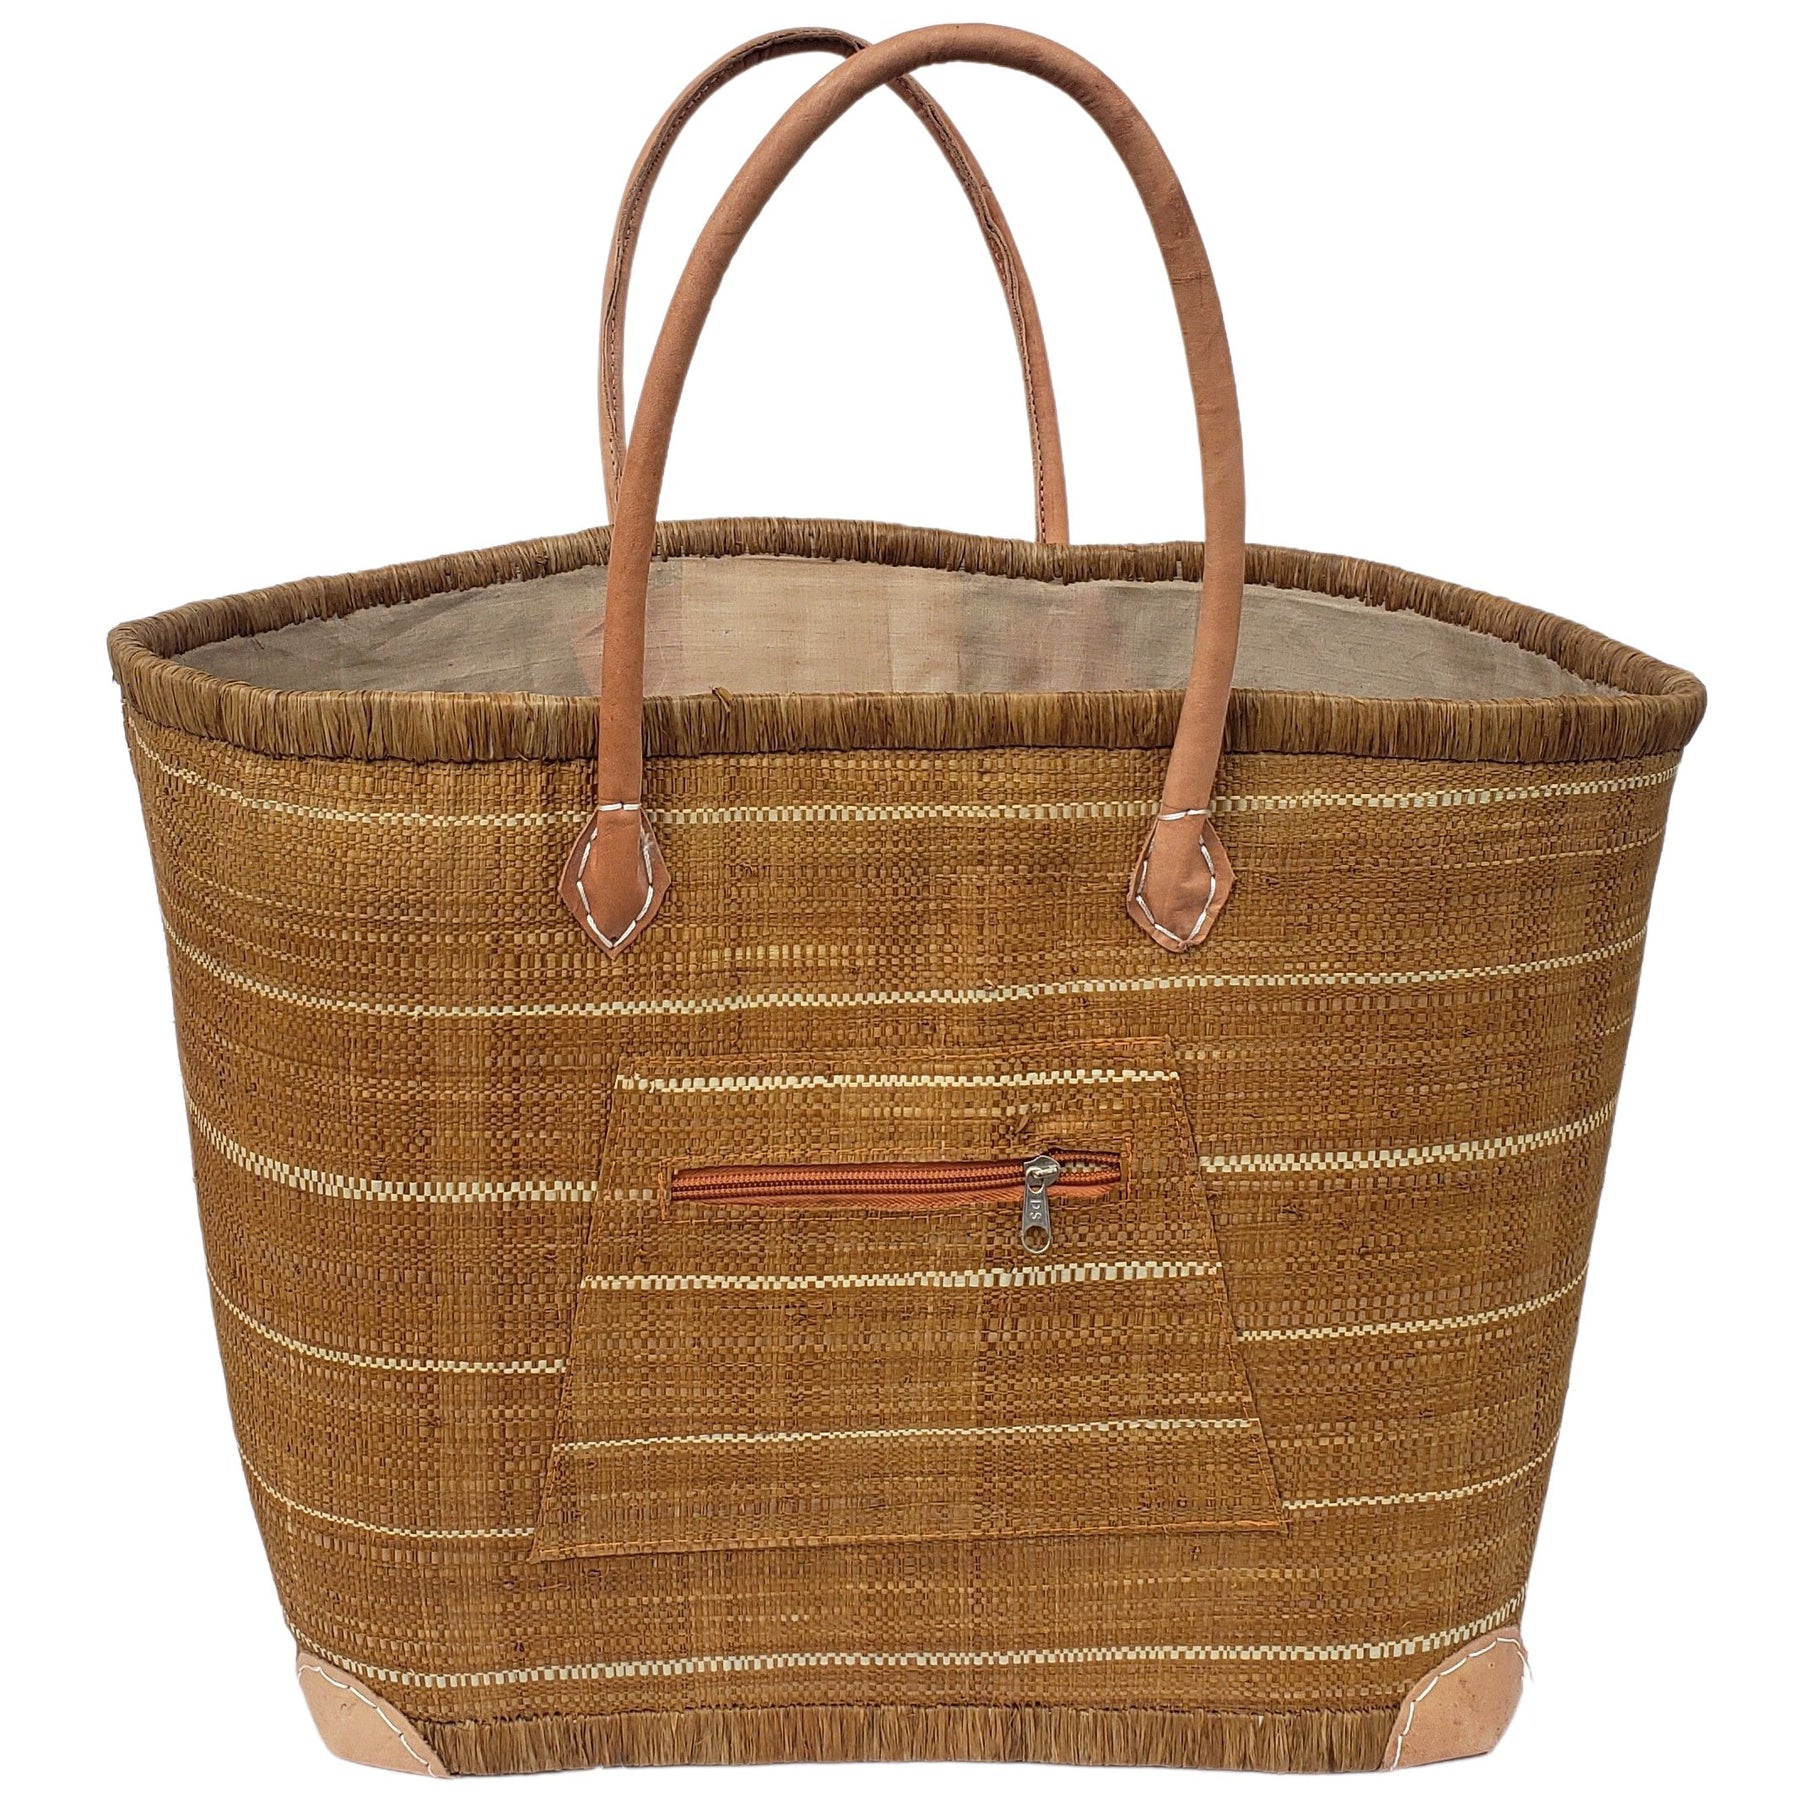 39 of 59: Adjanie: Authentic Madagascar Raffia and Leather Tote Bag (Brown Stripe)